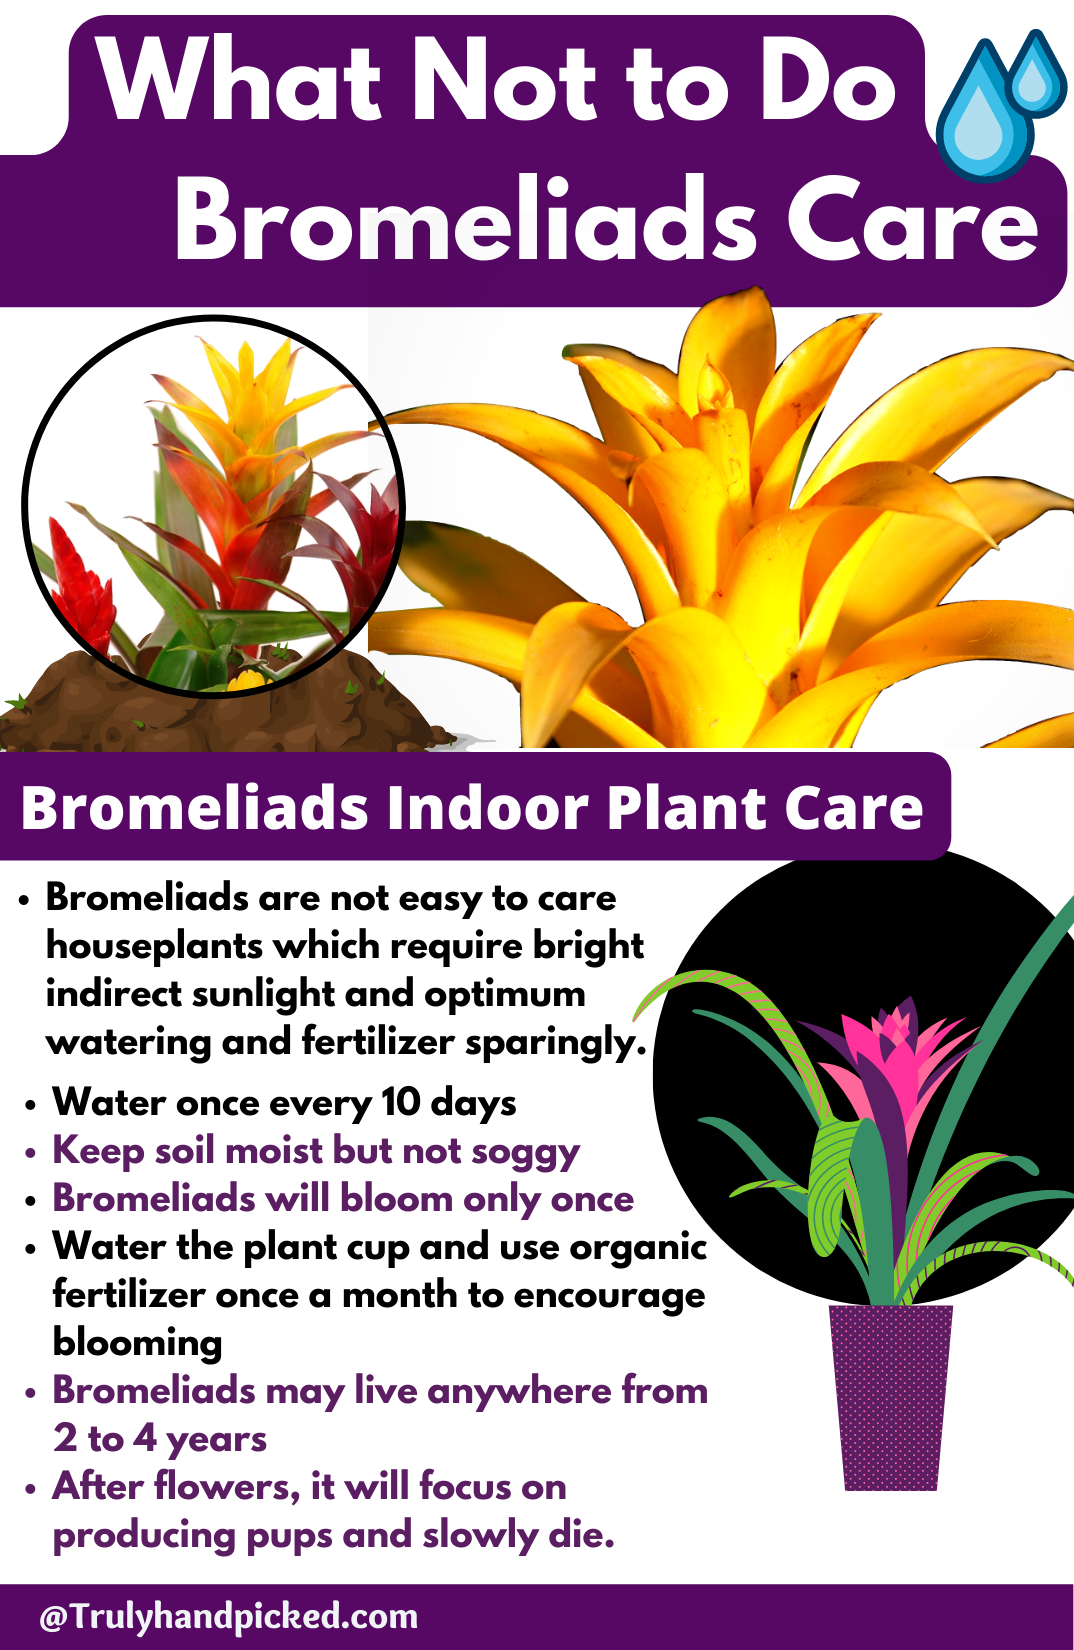 Pinterest Bromeliads Care Infographic Image